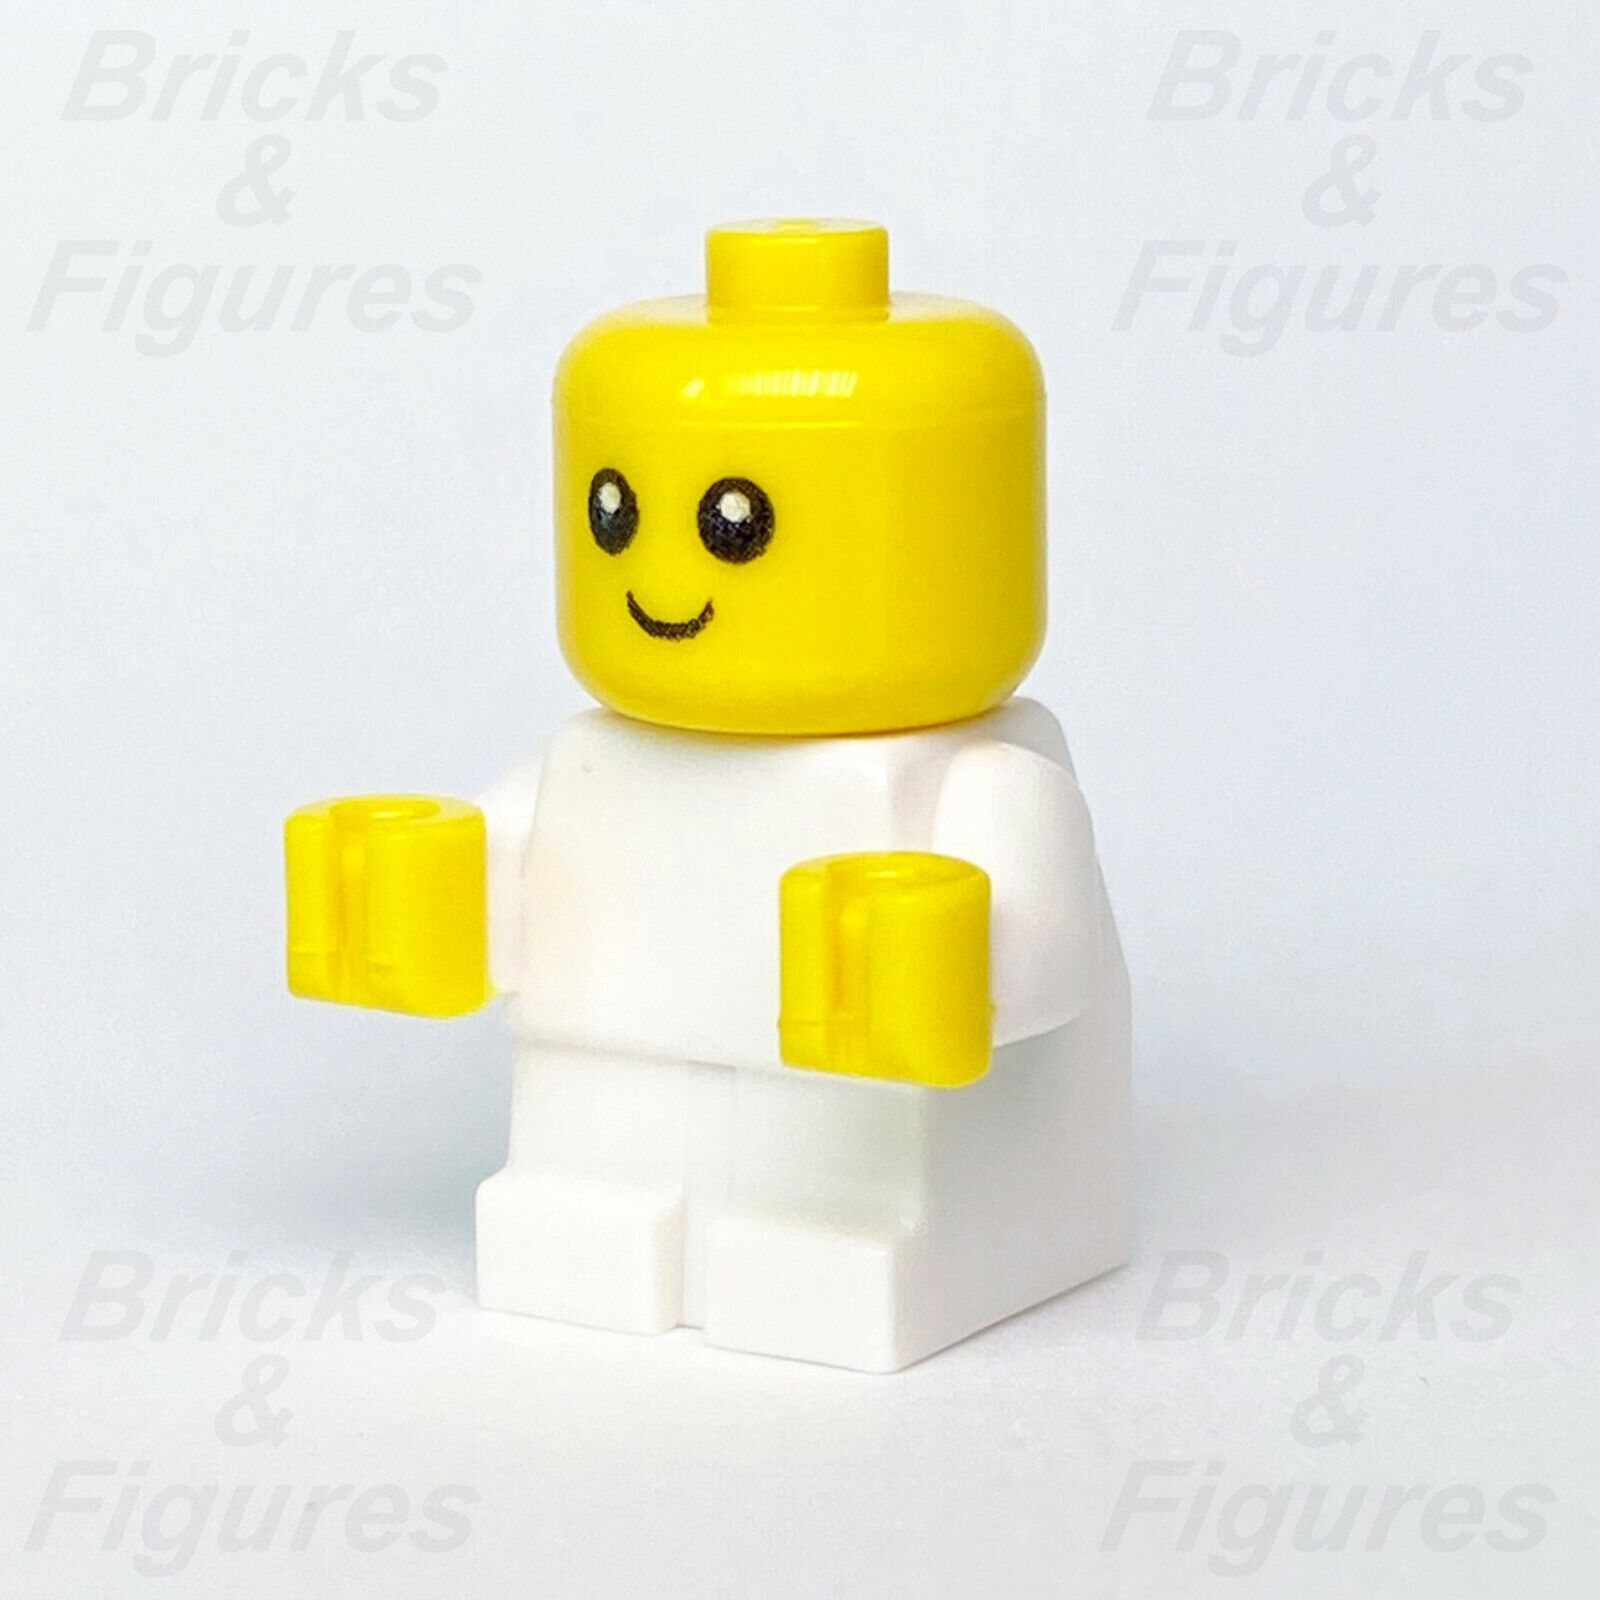 lego assembly square ebay